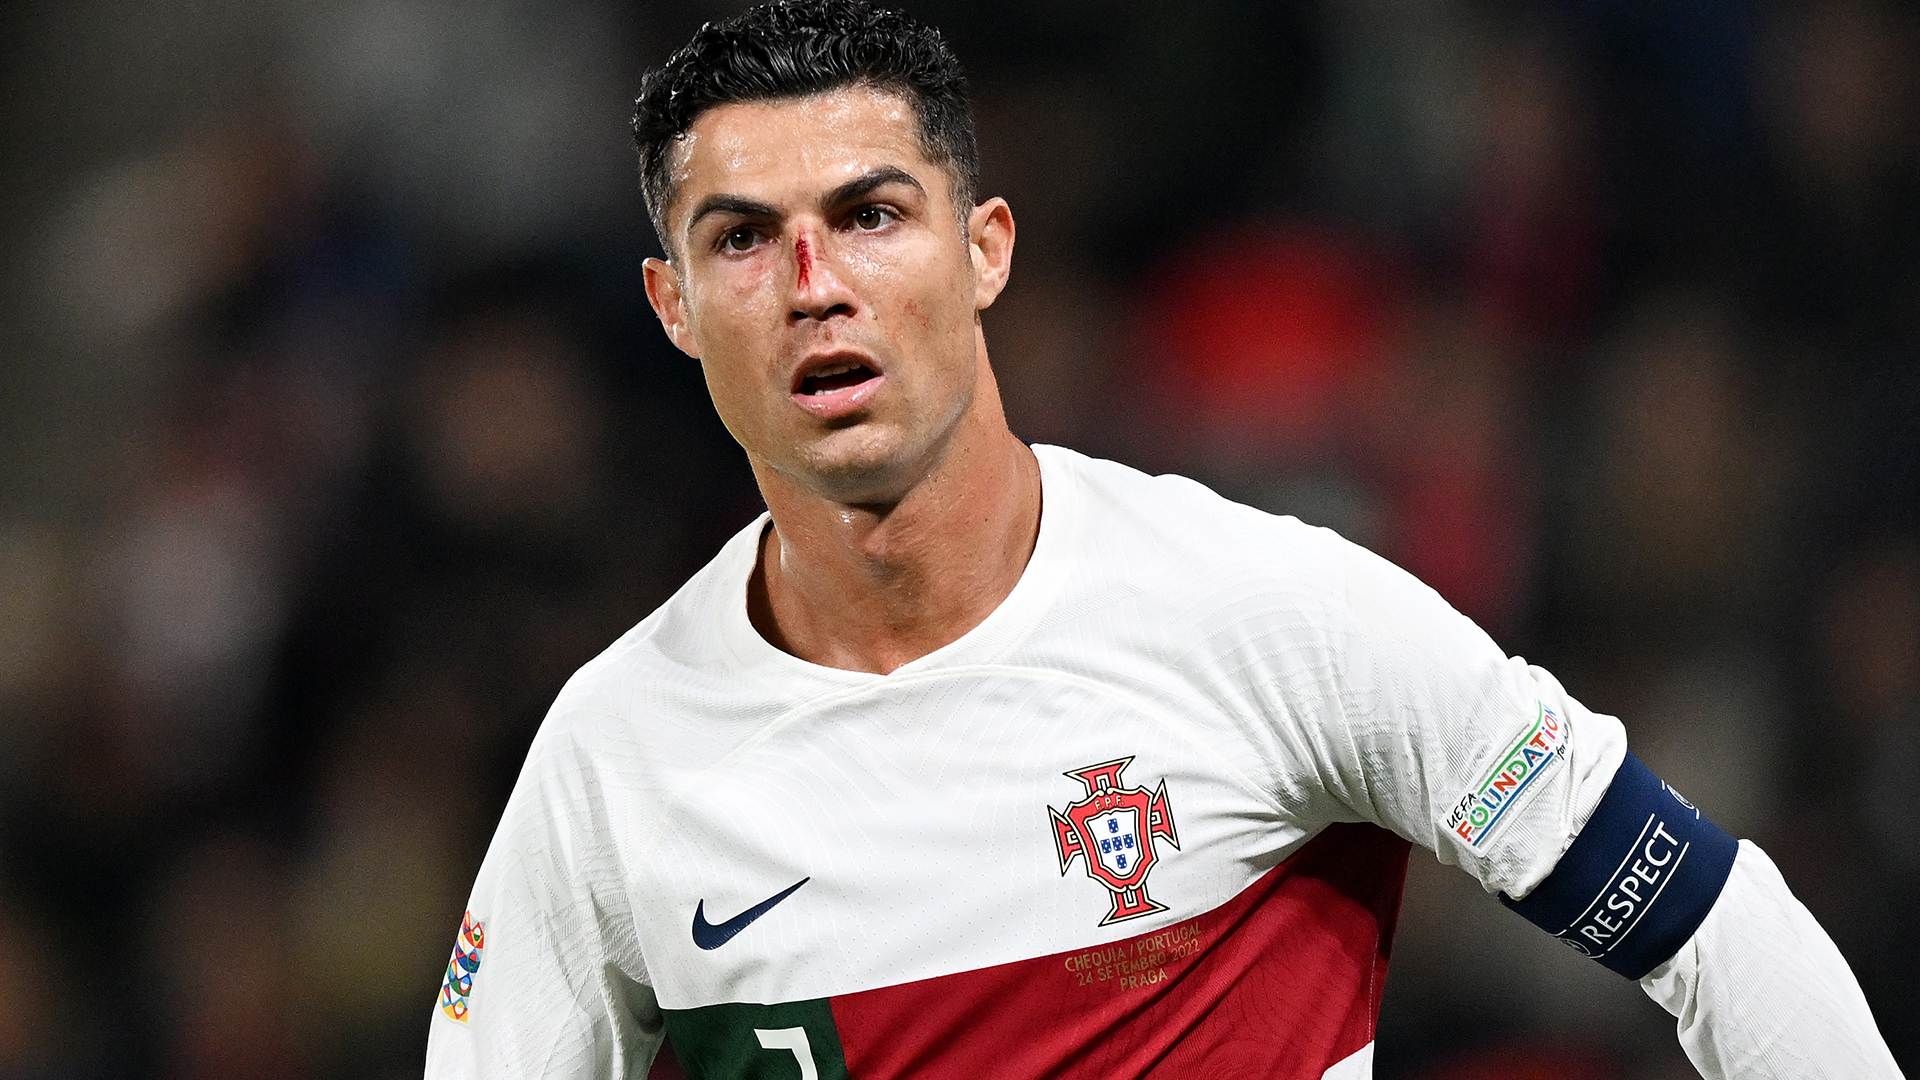 Diogo Dalot scores twice as Portugal defeats Czech Republic 4-0 in the Nations League